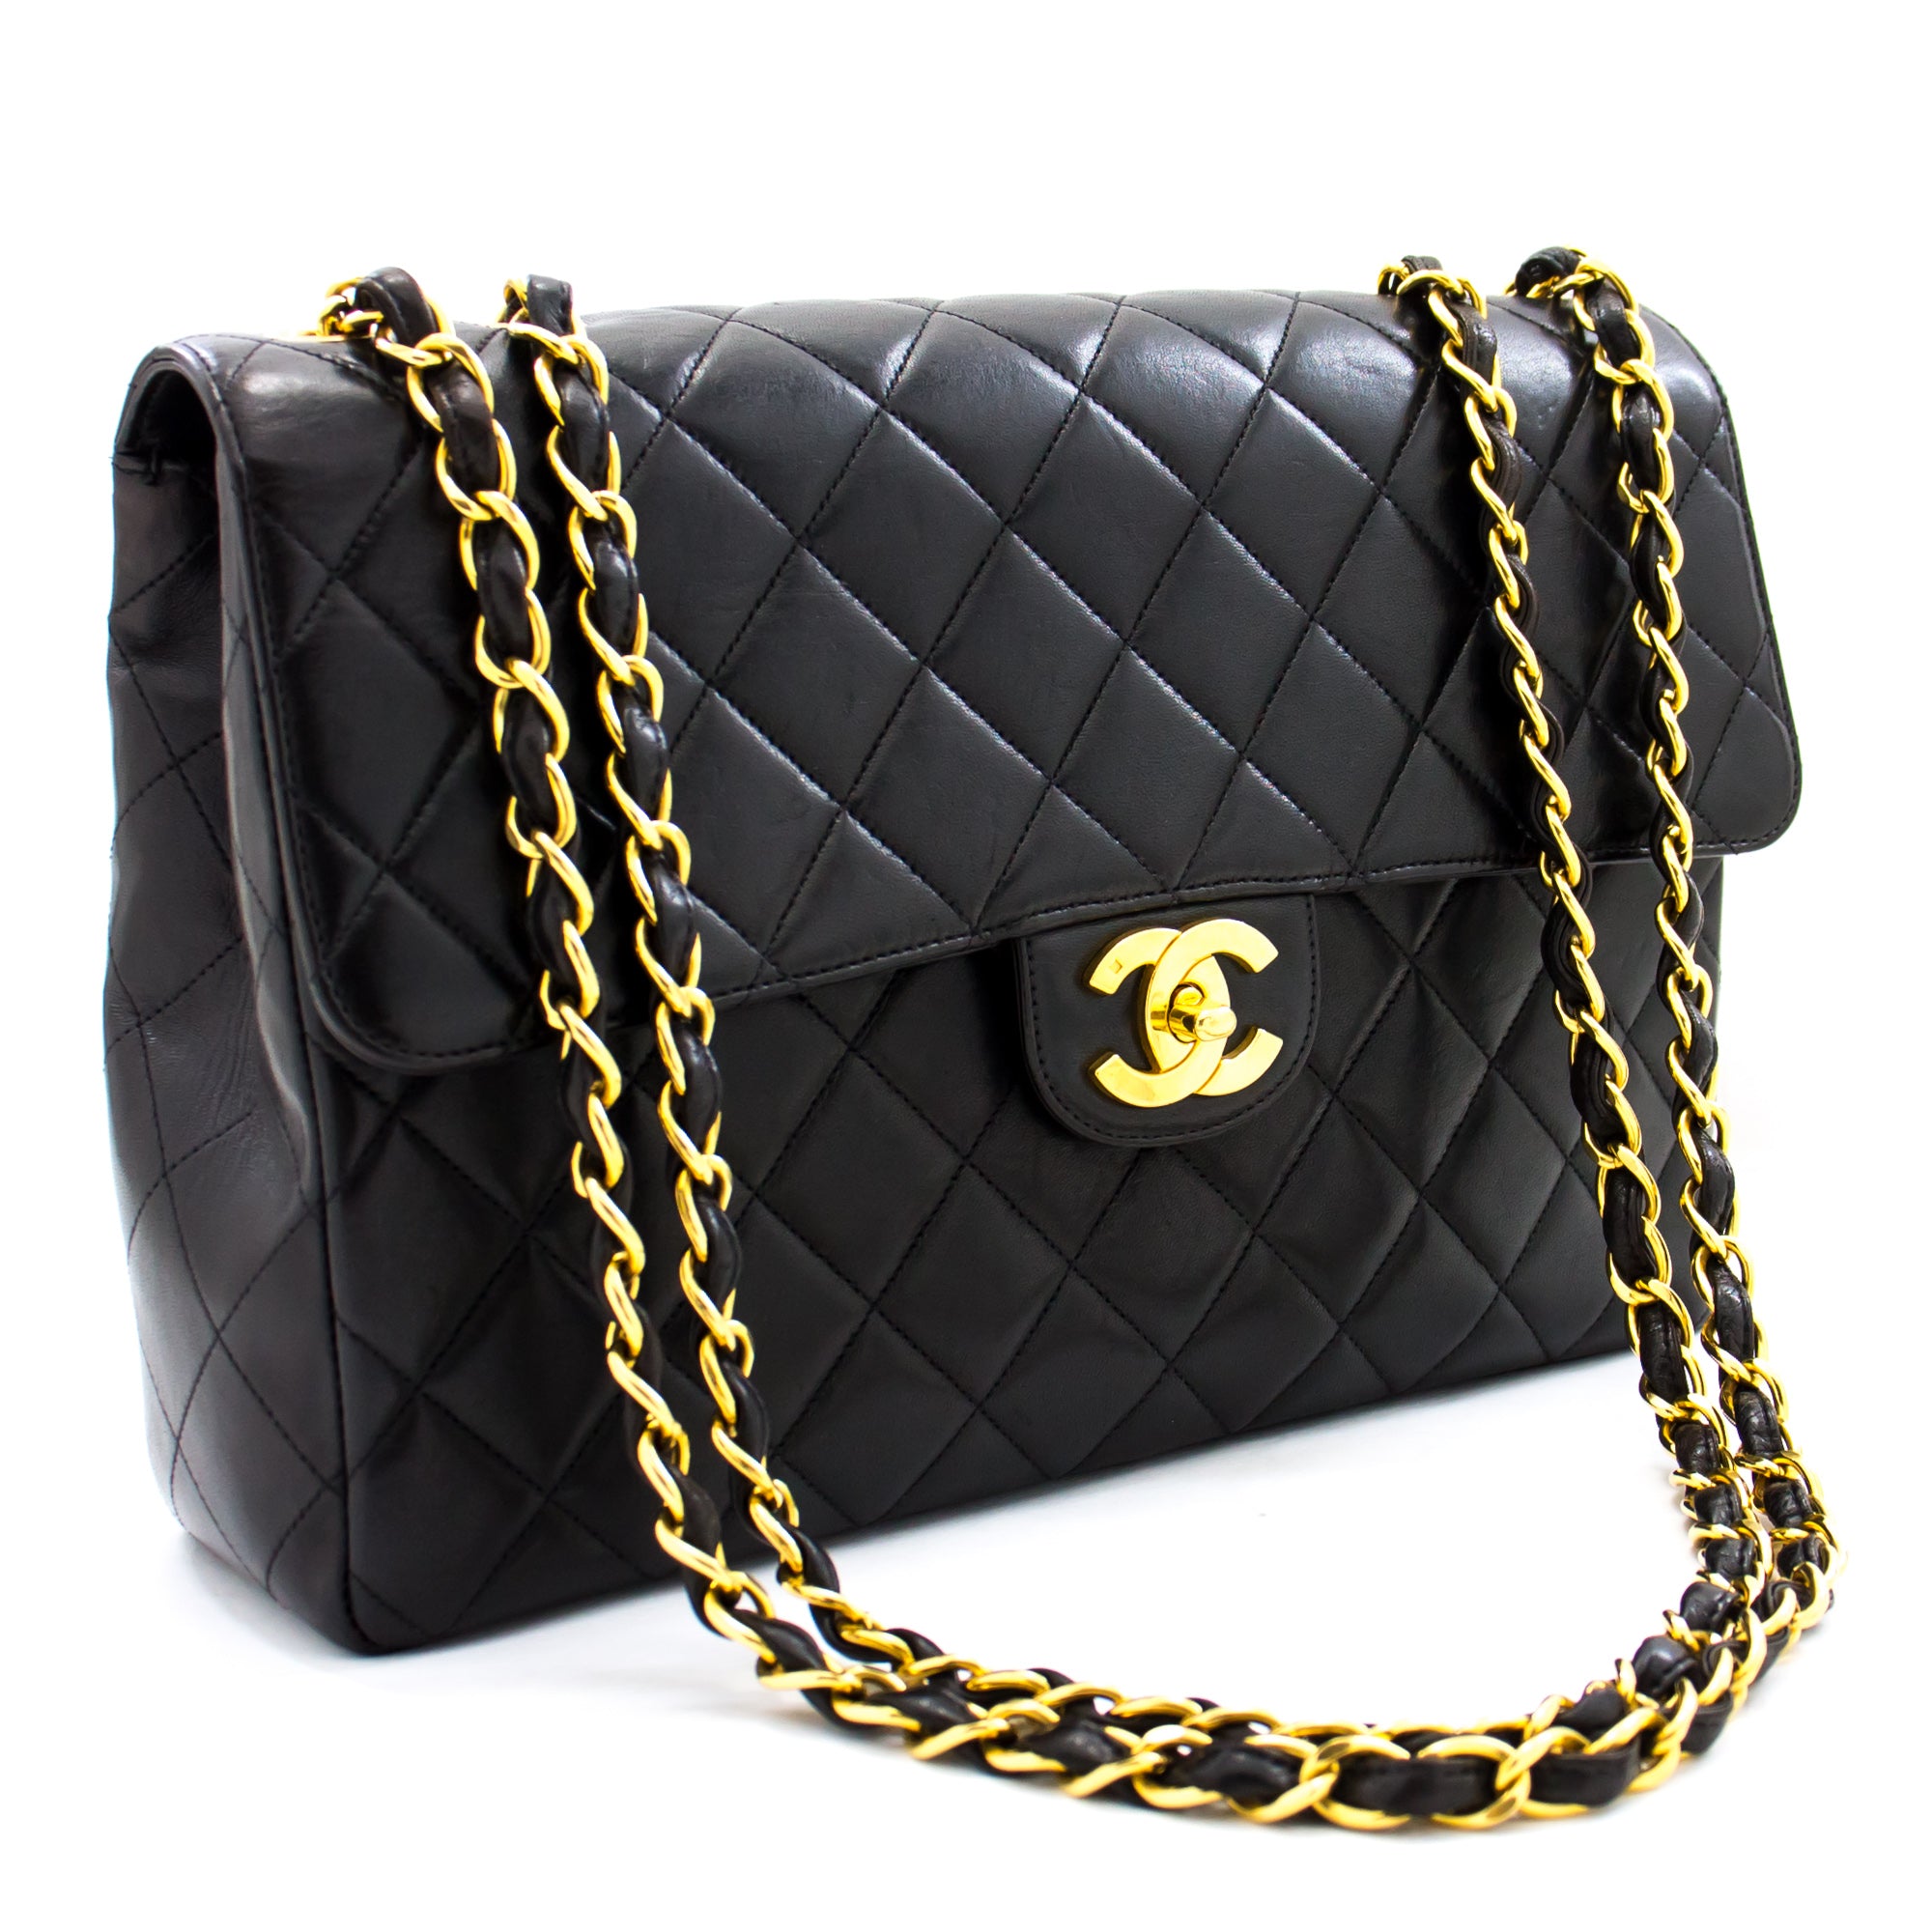 Handbags Chanel Chanel Jumbo 11 Large Chain Shoulder Bag Flap Black Lambskin Gold